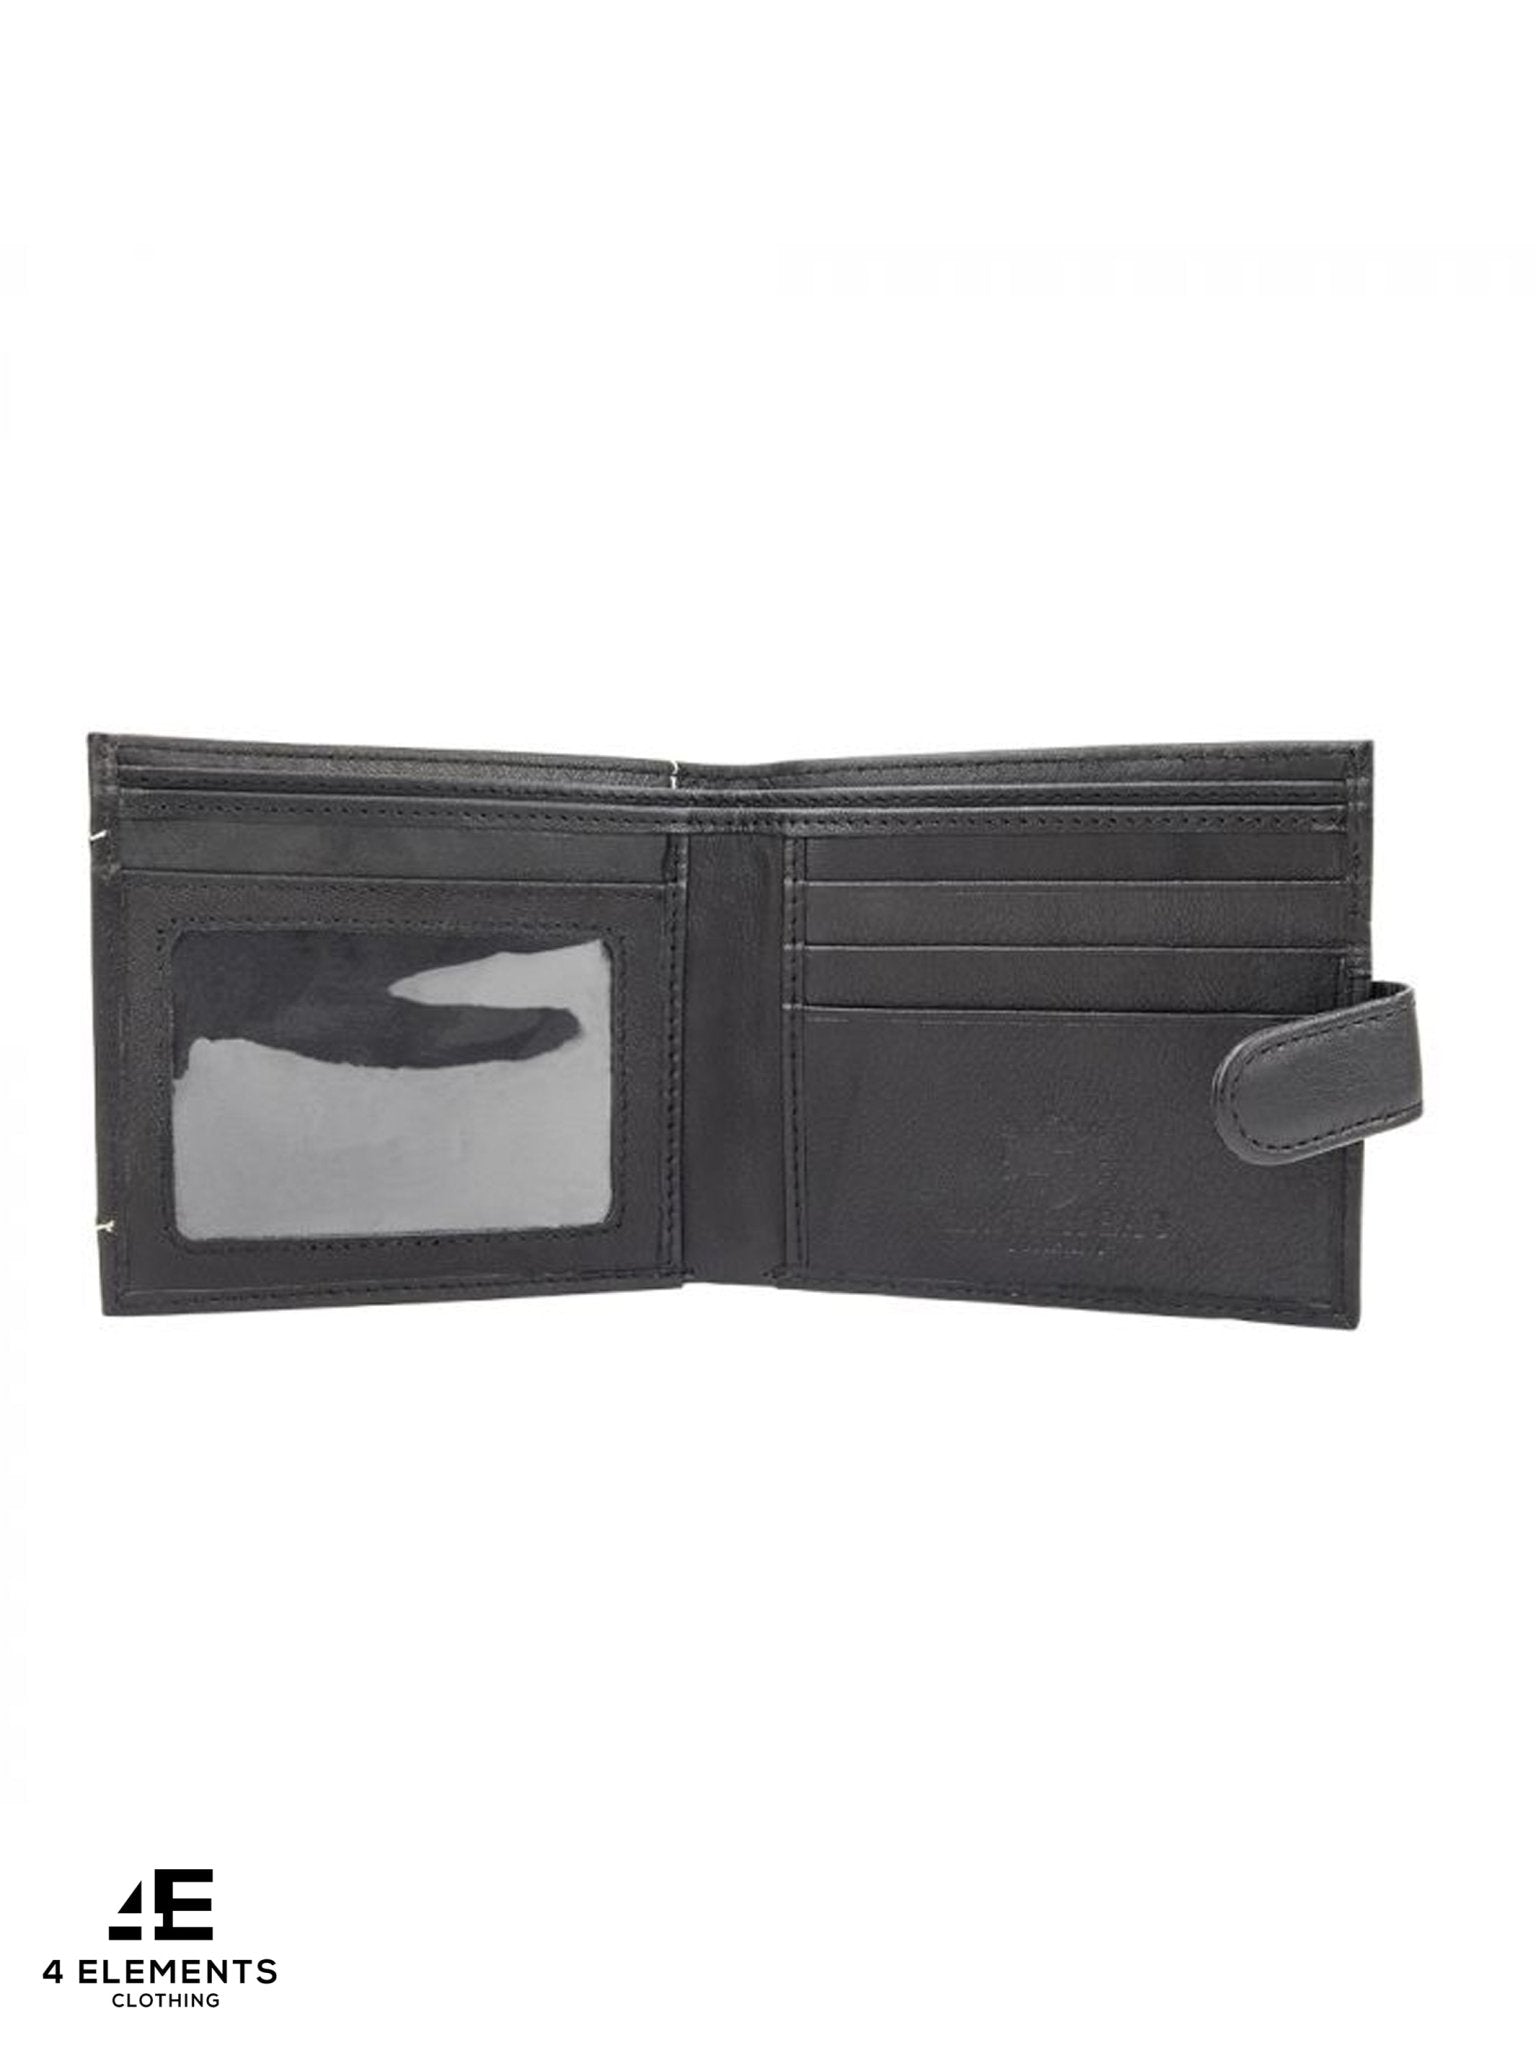 4elementsclothingThe British Bag CompanyThe British Bag Company - Leather Wallet with Padded EdgeBag710510